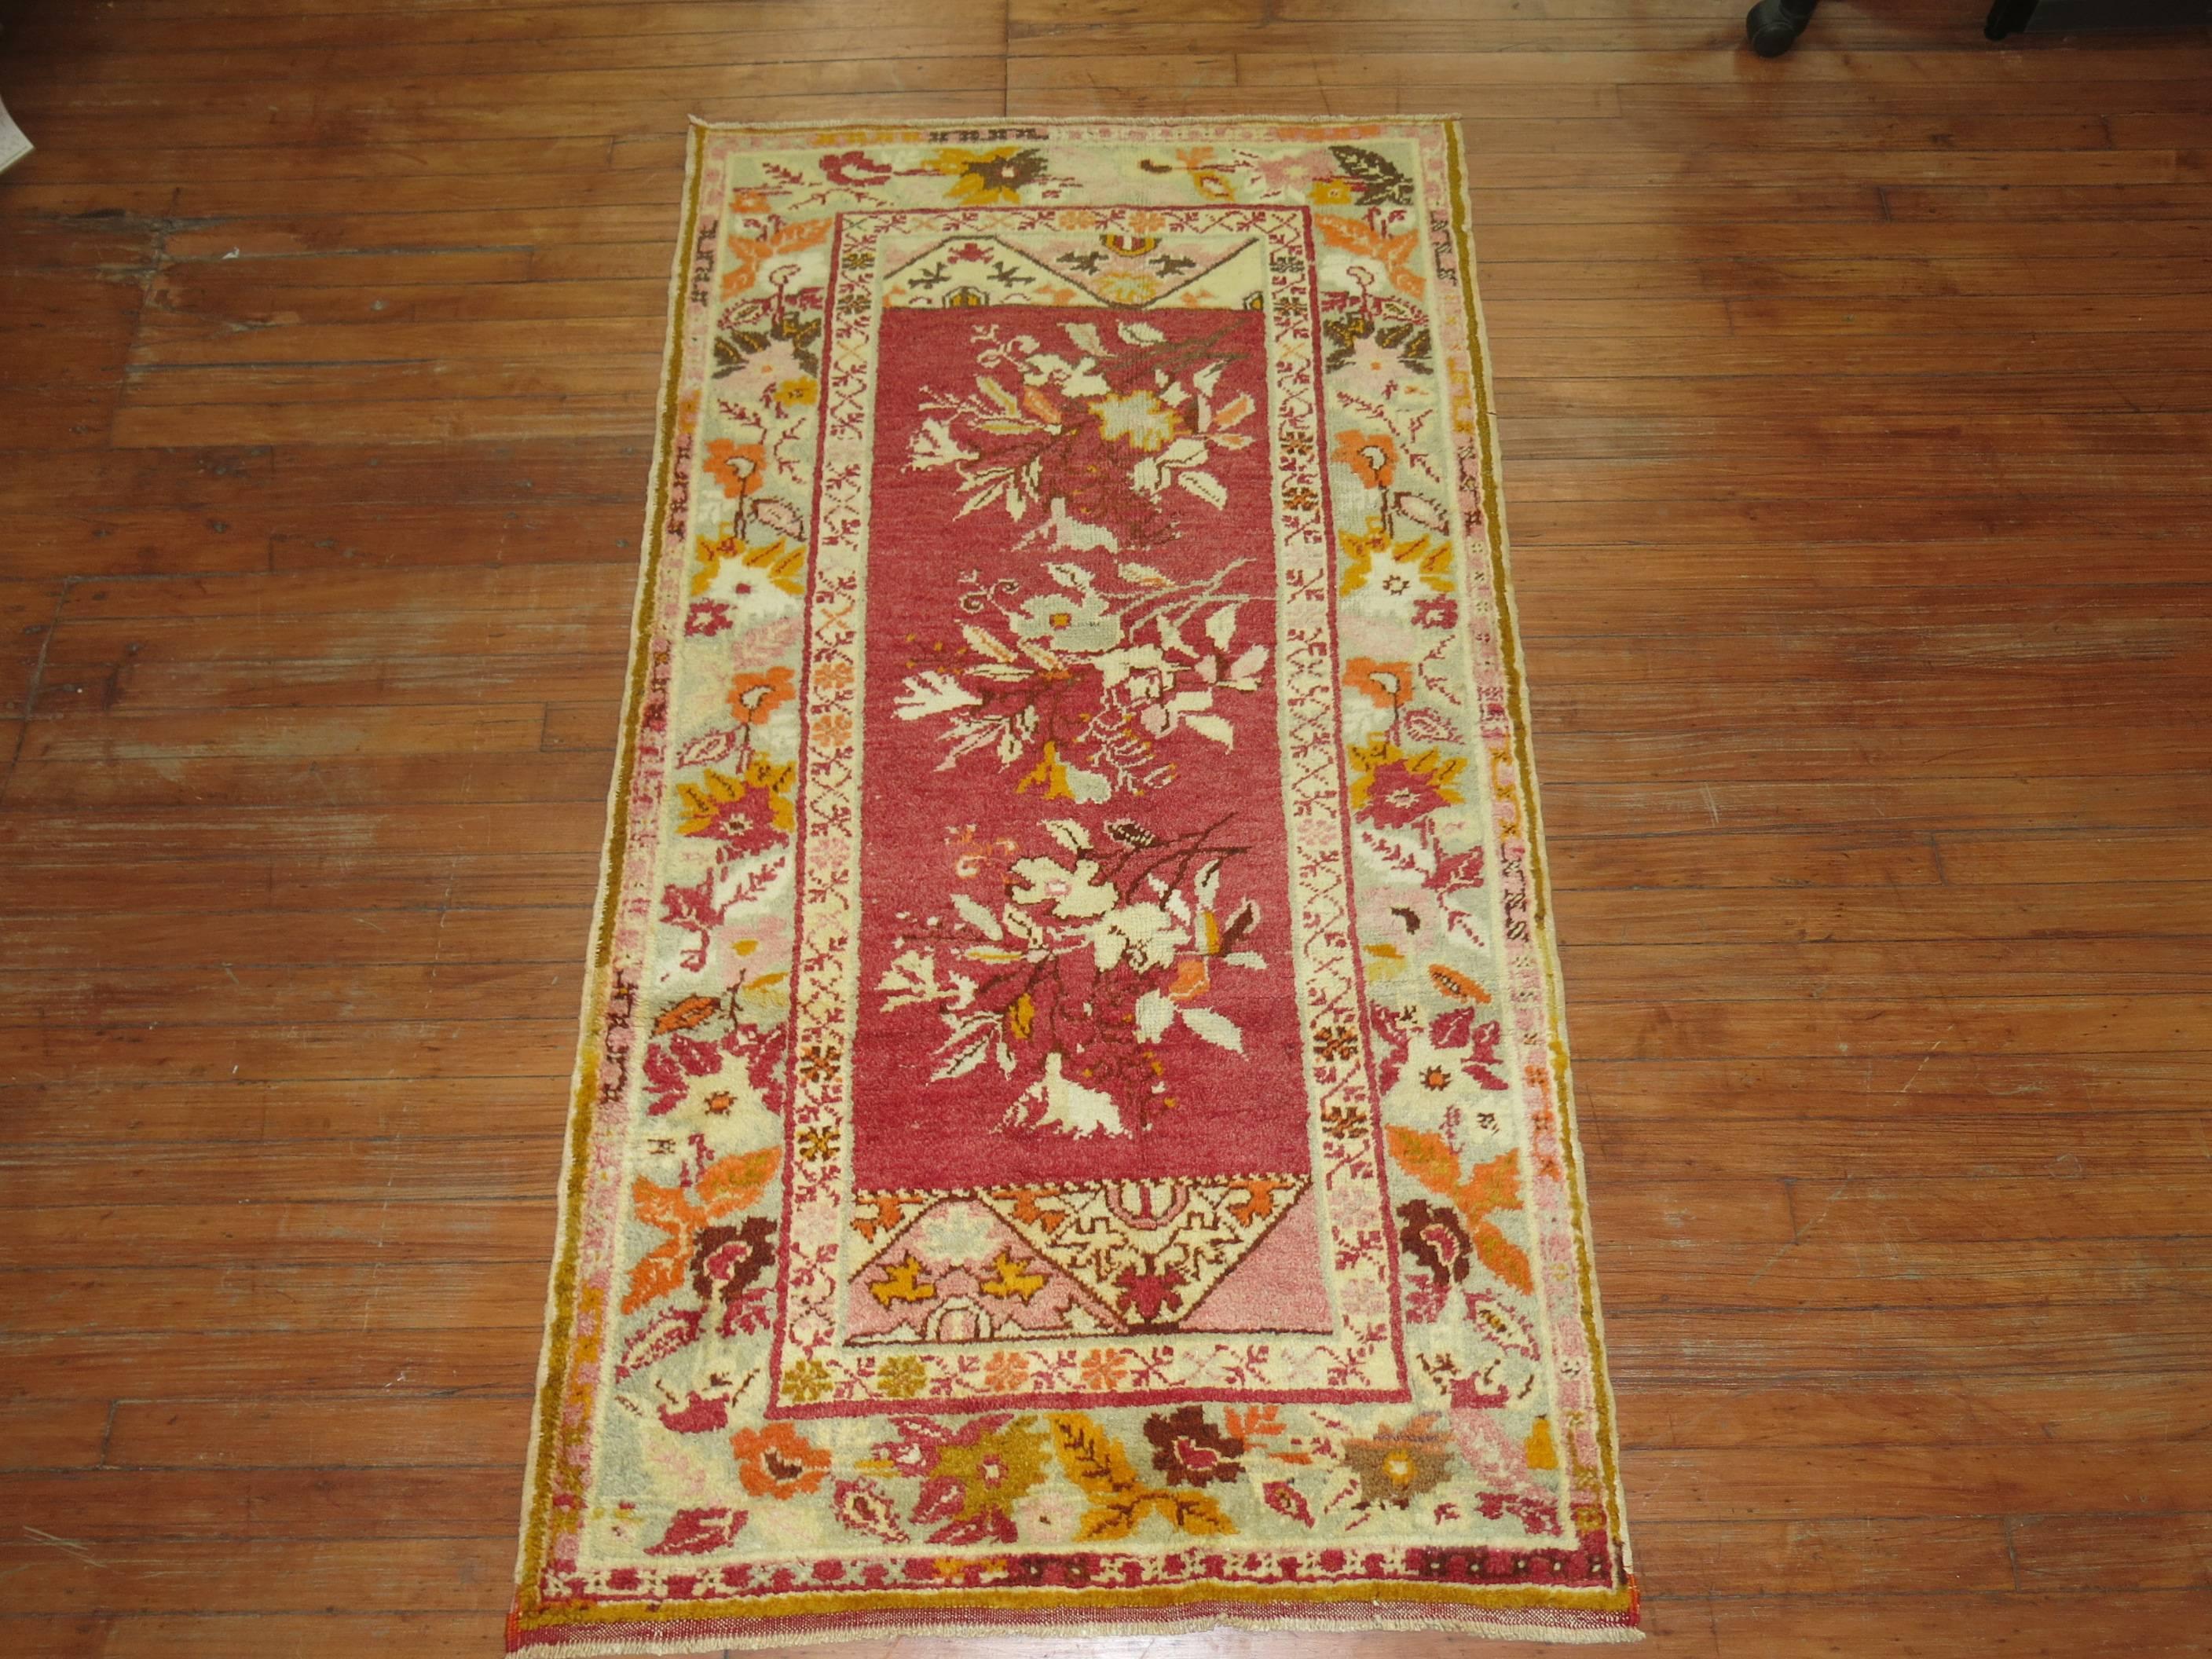 A mid-20th century Turkish Oushak rug.